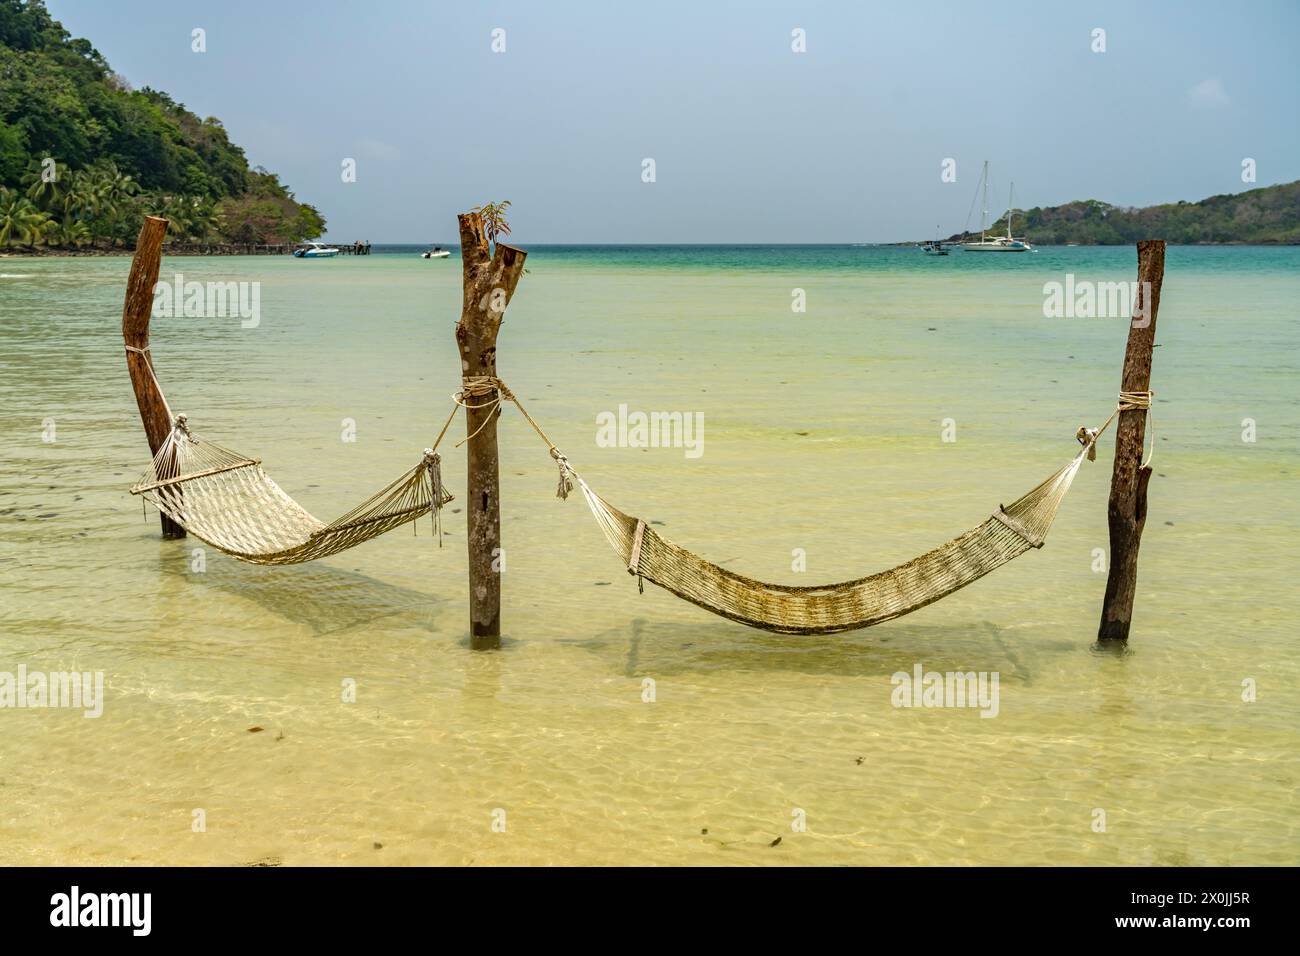 Hammocks in Bang Bao Bay, Ko Kut Island or Koh Kood in the Gulf of Thailand, Asia Stock Photo